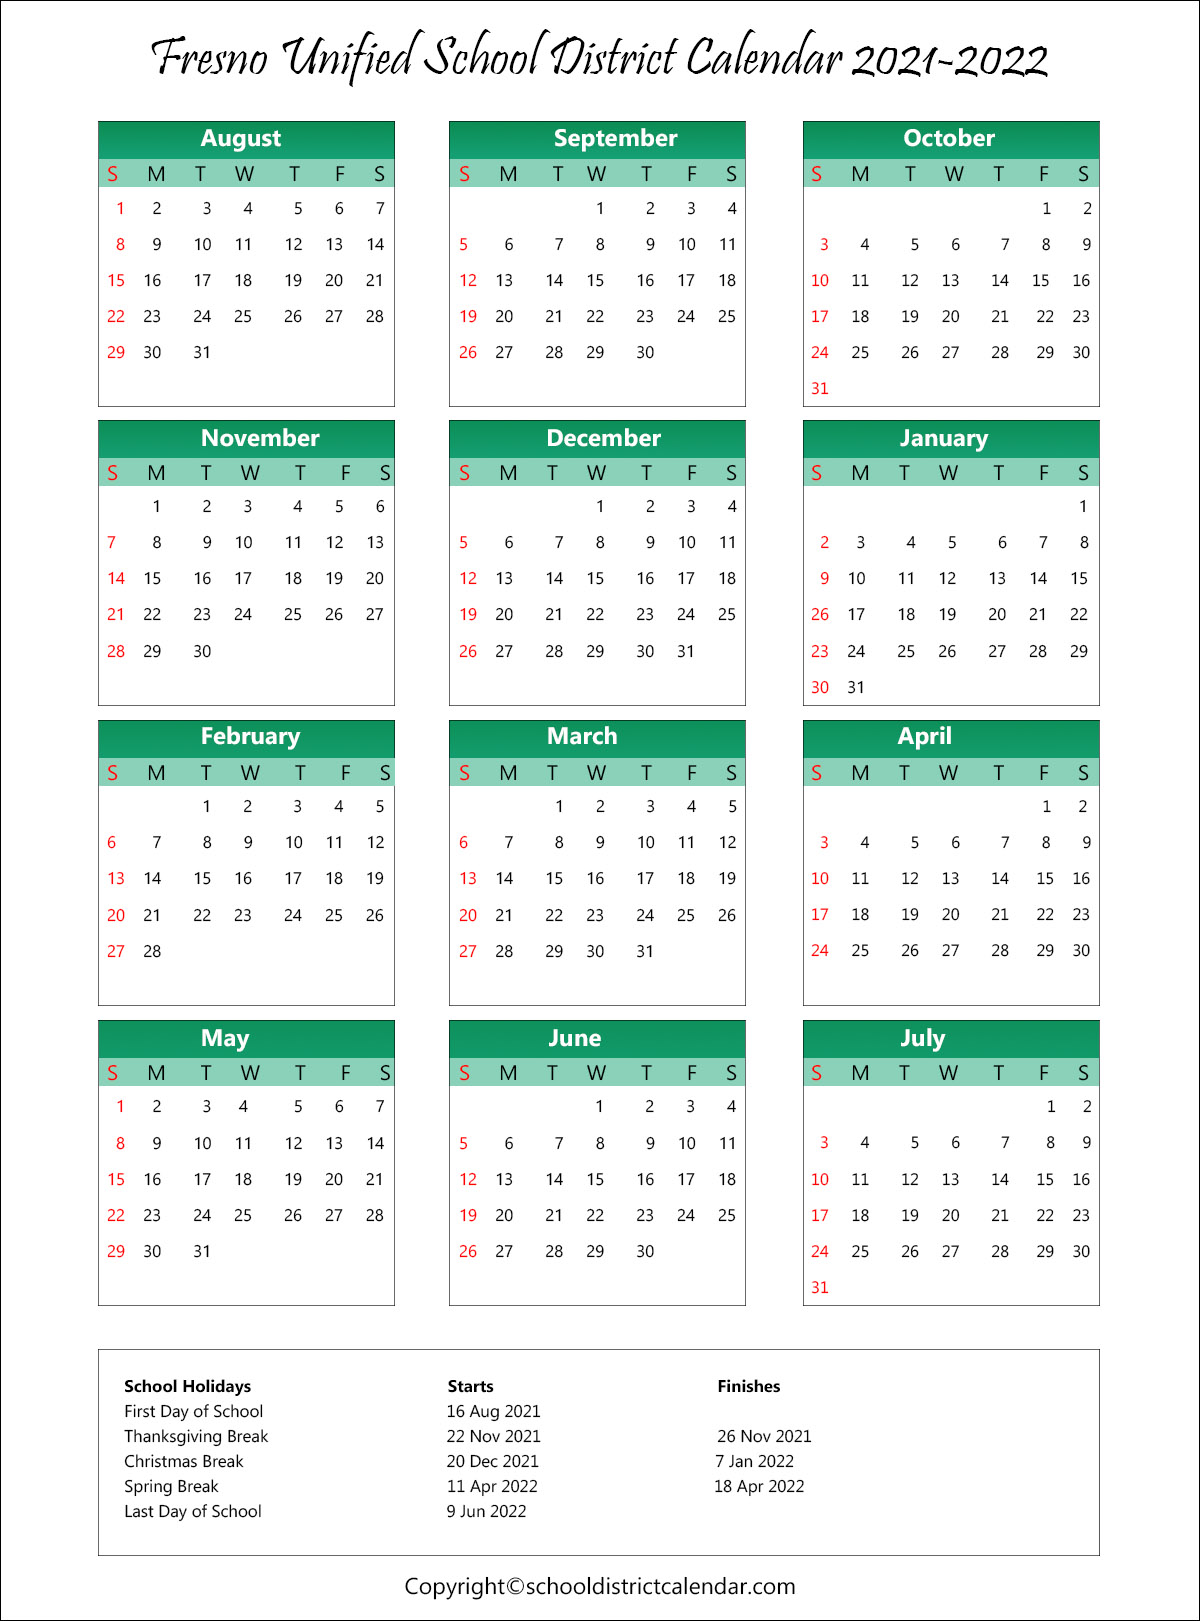 Fresno Unified School District, California Calendar Holidays 2021